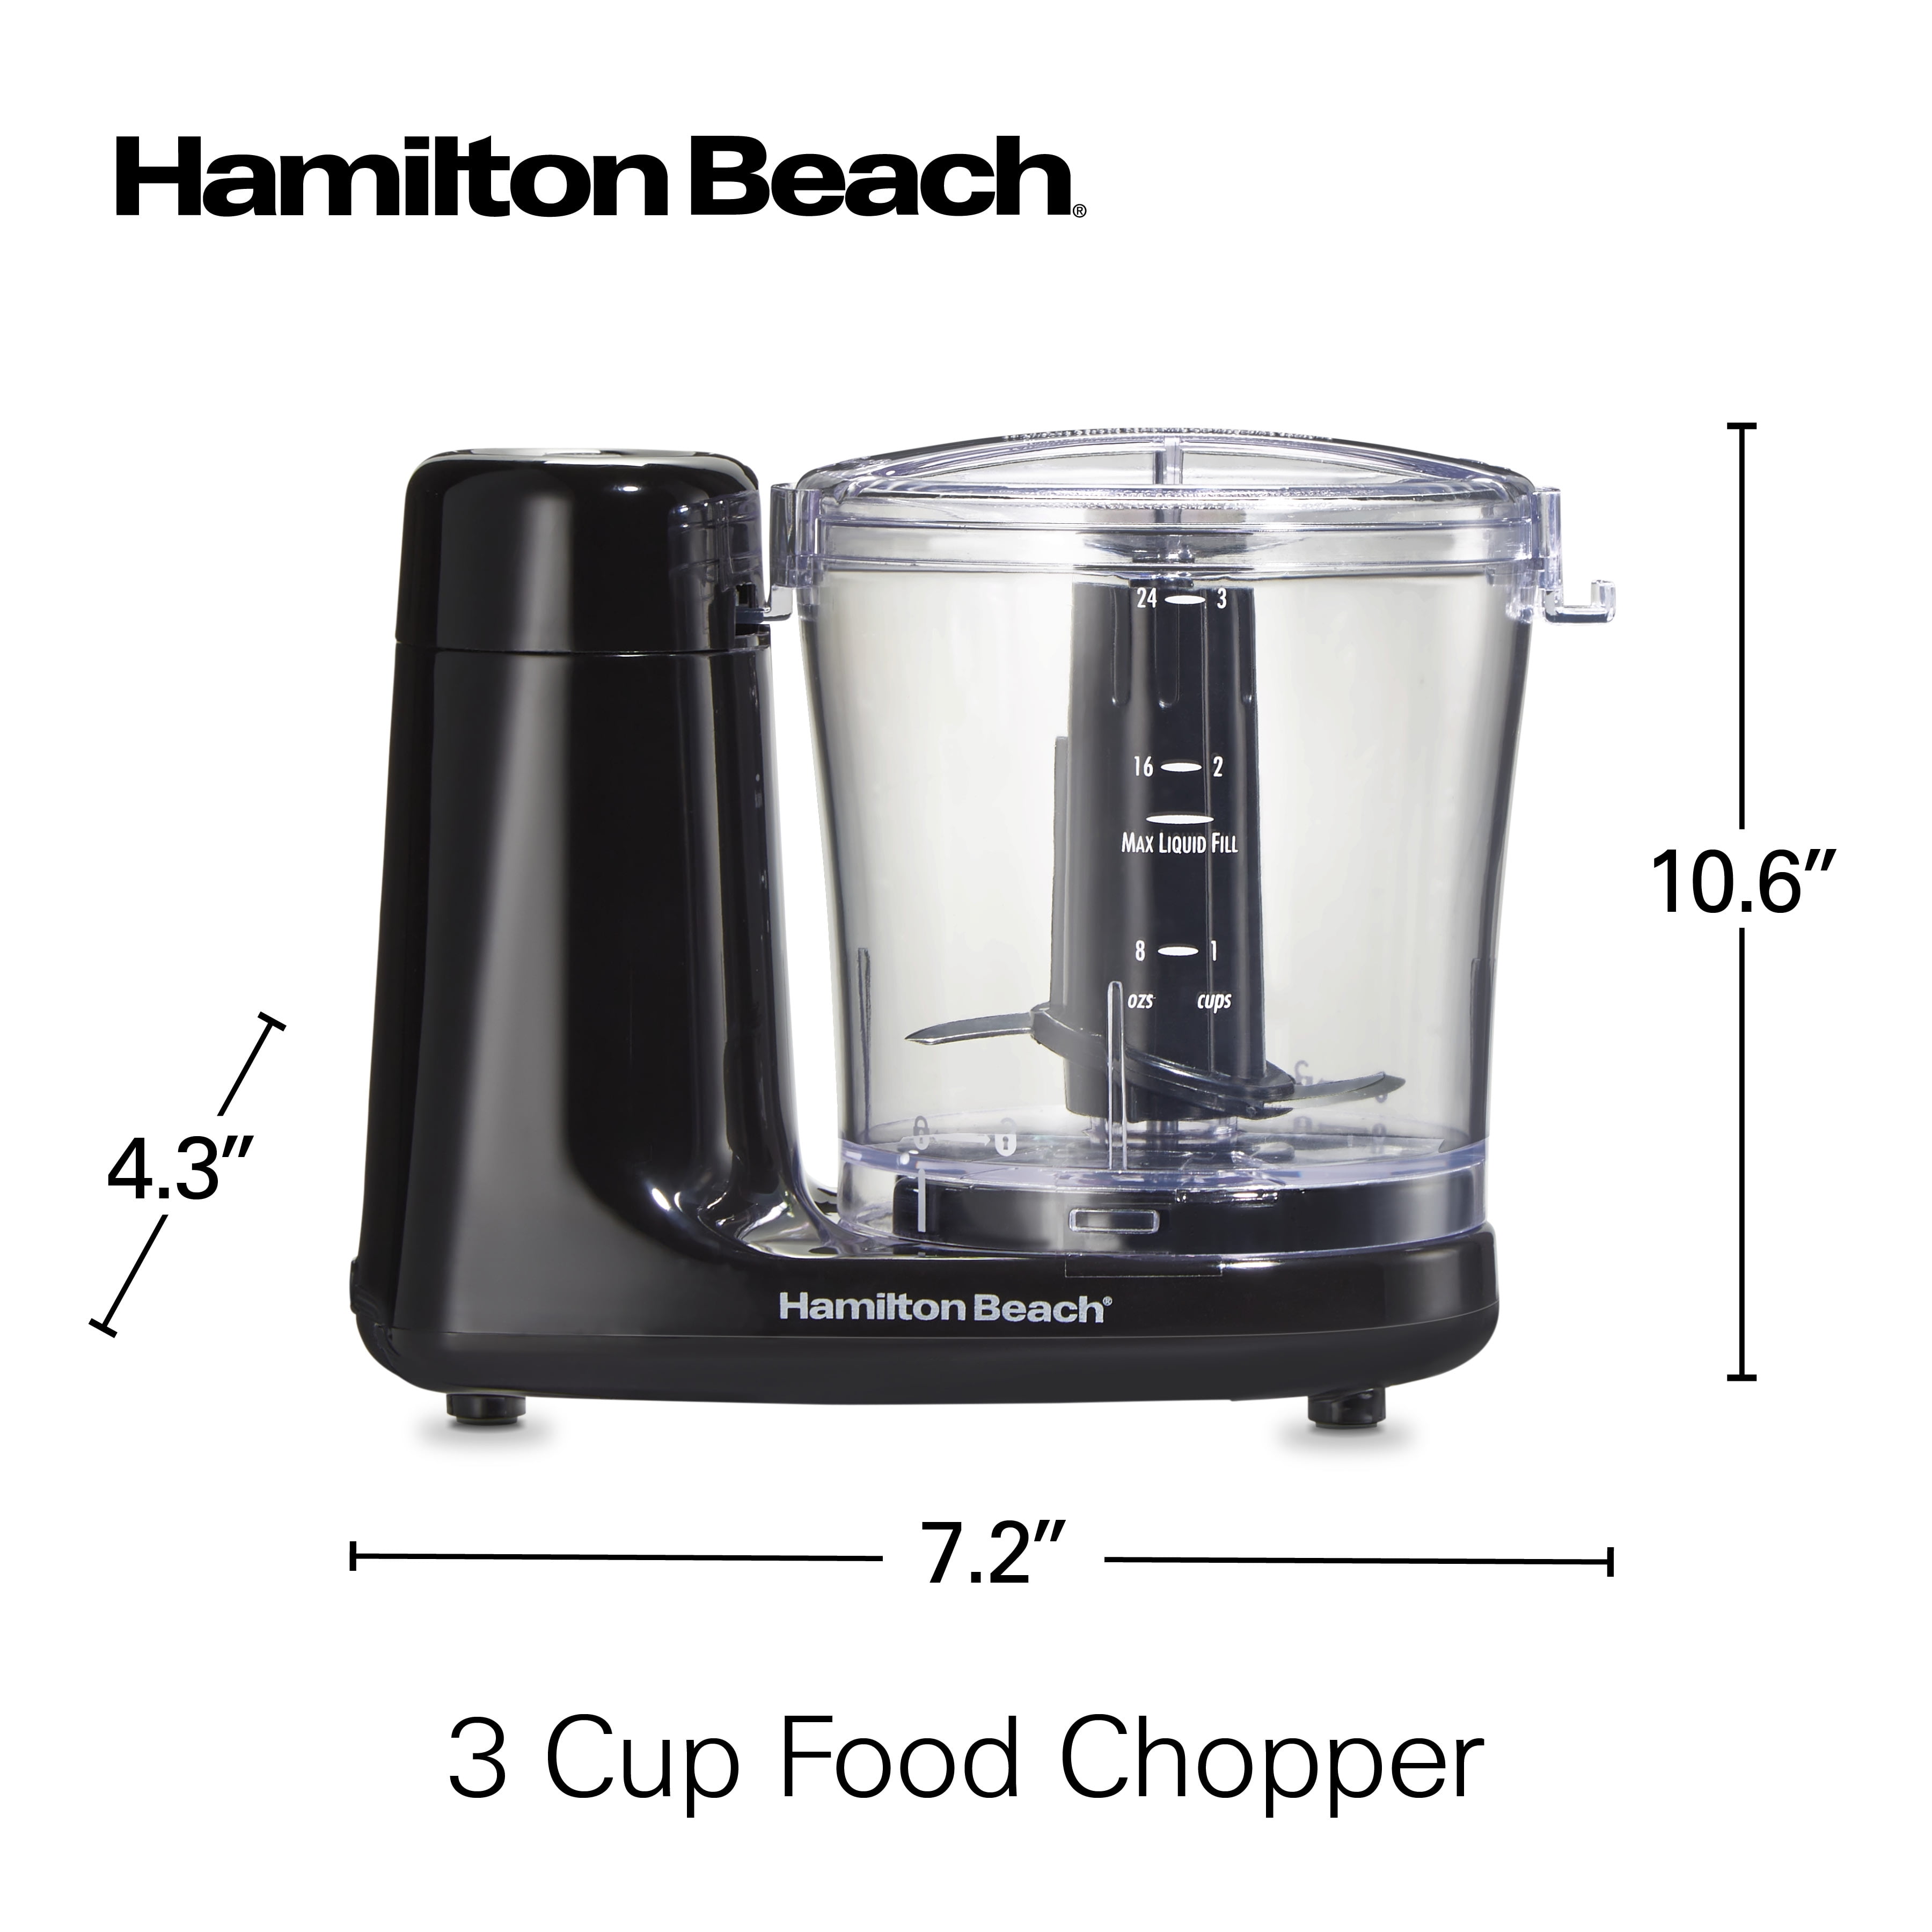 Hamilton Beach 3 Cup FreshChop Mini Food Chopper, Black, 72603 